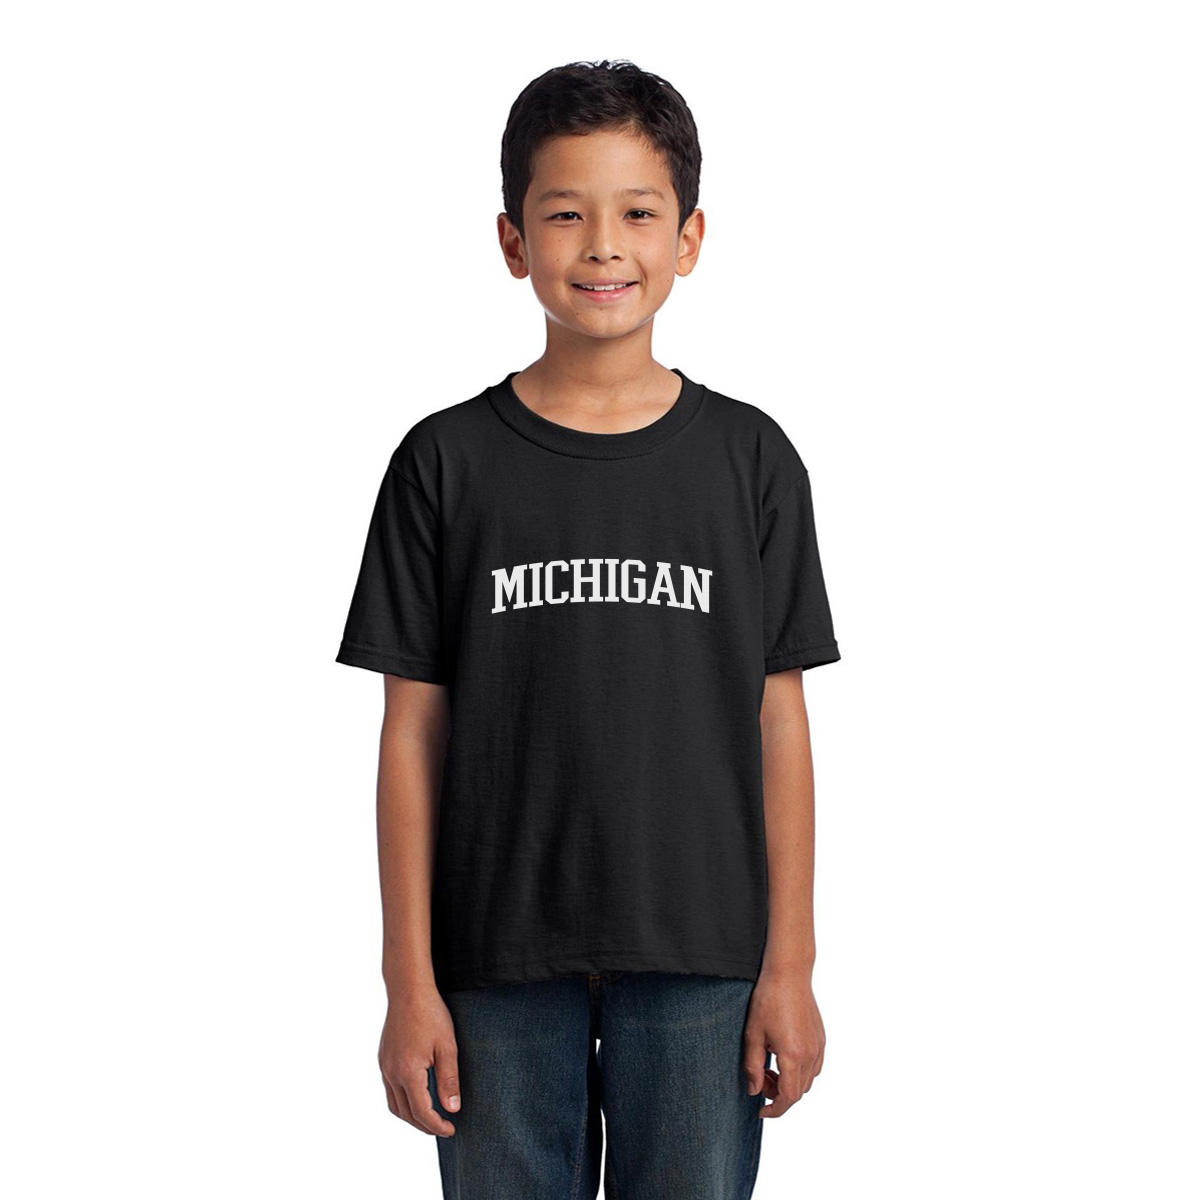 Michigan Kids T-shirt | Black